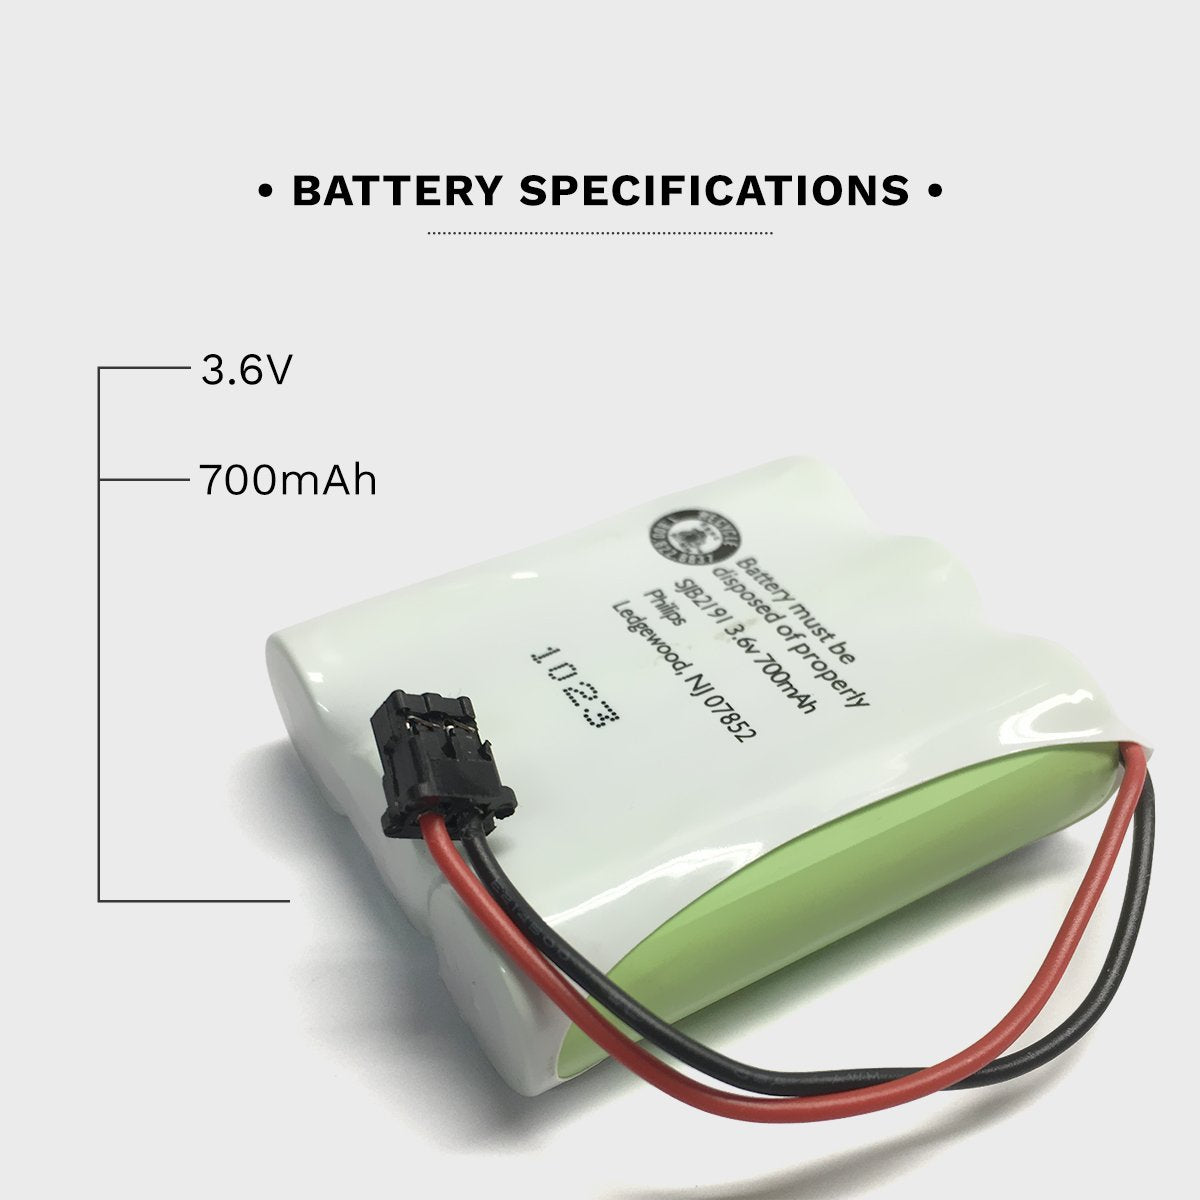 Sharp CL-200 Cordless Phone Battery